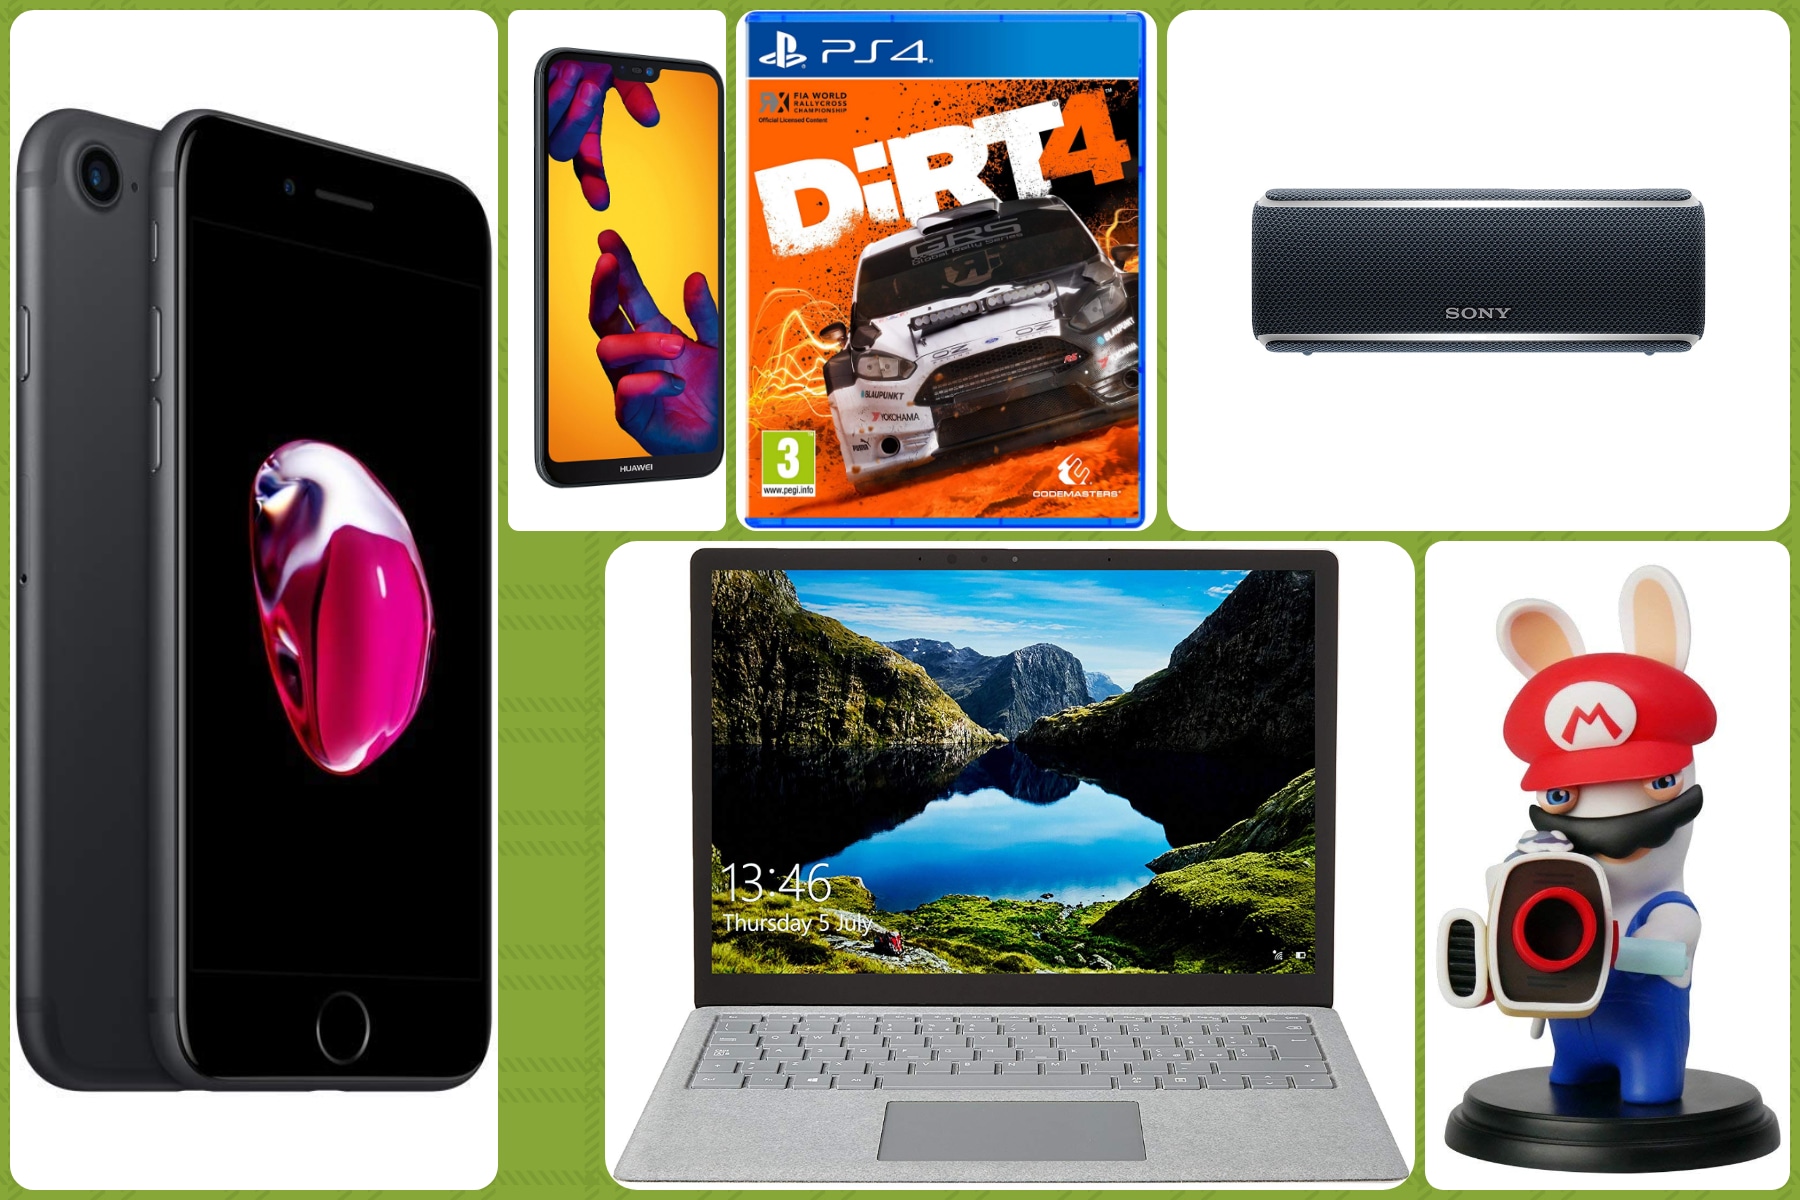 Offerte Amazon: cam Yi, iPhone 7, hardware PC, Surface Laptop e tanto altro